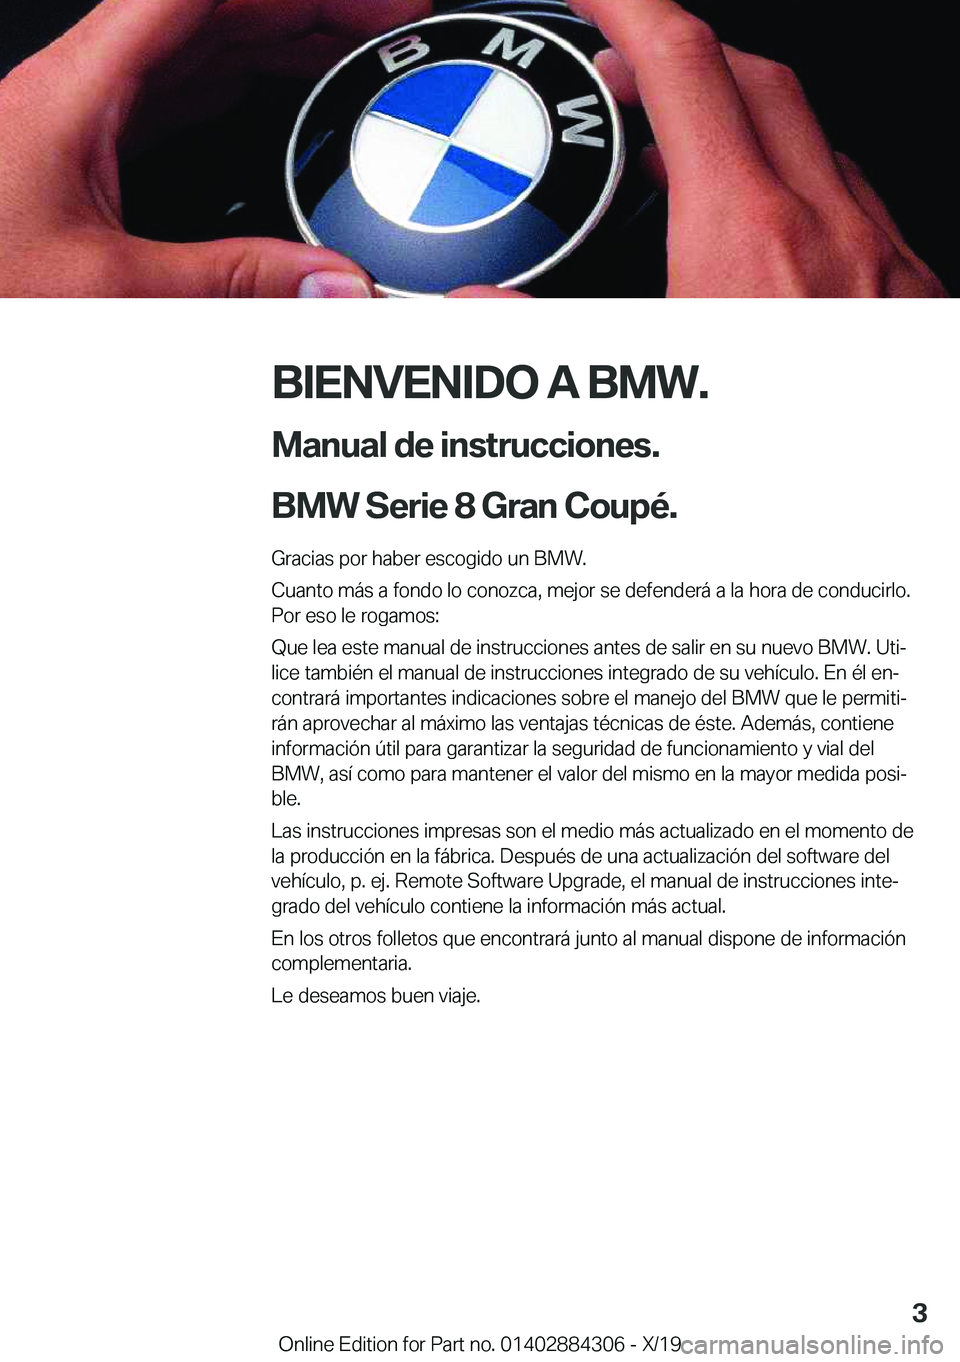 BMW 8 SERIES GRAN COUPE 2020  Manuales de Empleo (in Spanish) �B�I�E�N�V�E�N�I�D�O��A��B�M�W�.
�M�a�n�u�a�l��d�e��i�n�s�t�r�u�c�c�i�o�n�e�s�.
�B�M�W��S�e�r�i�e��8��G�r�a�n��C�o�u�p�